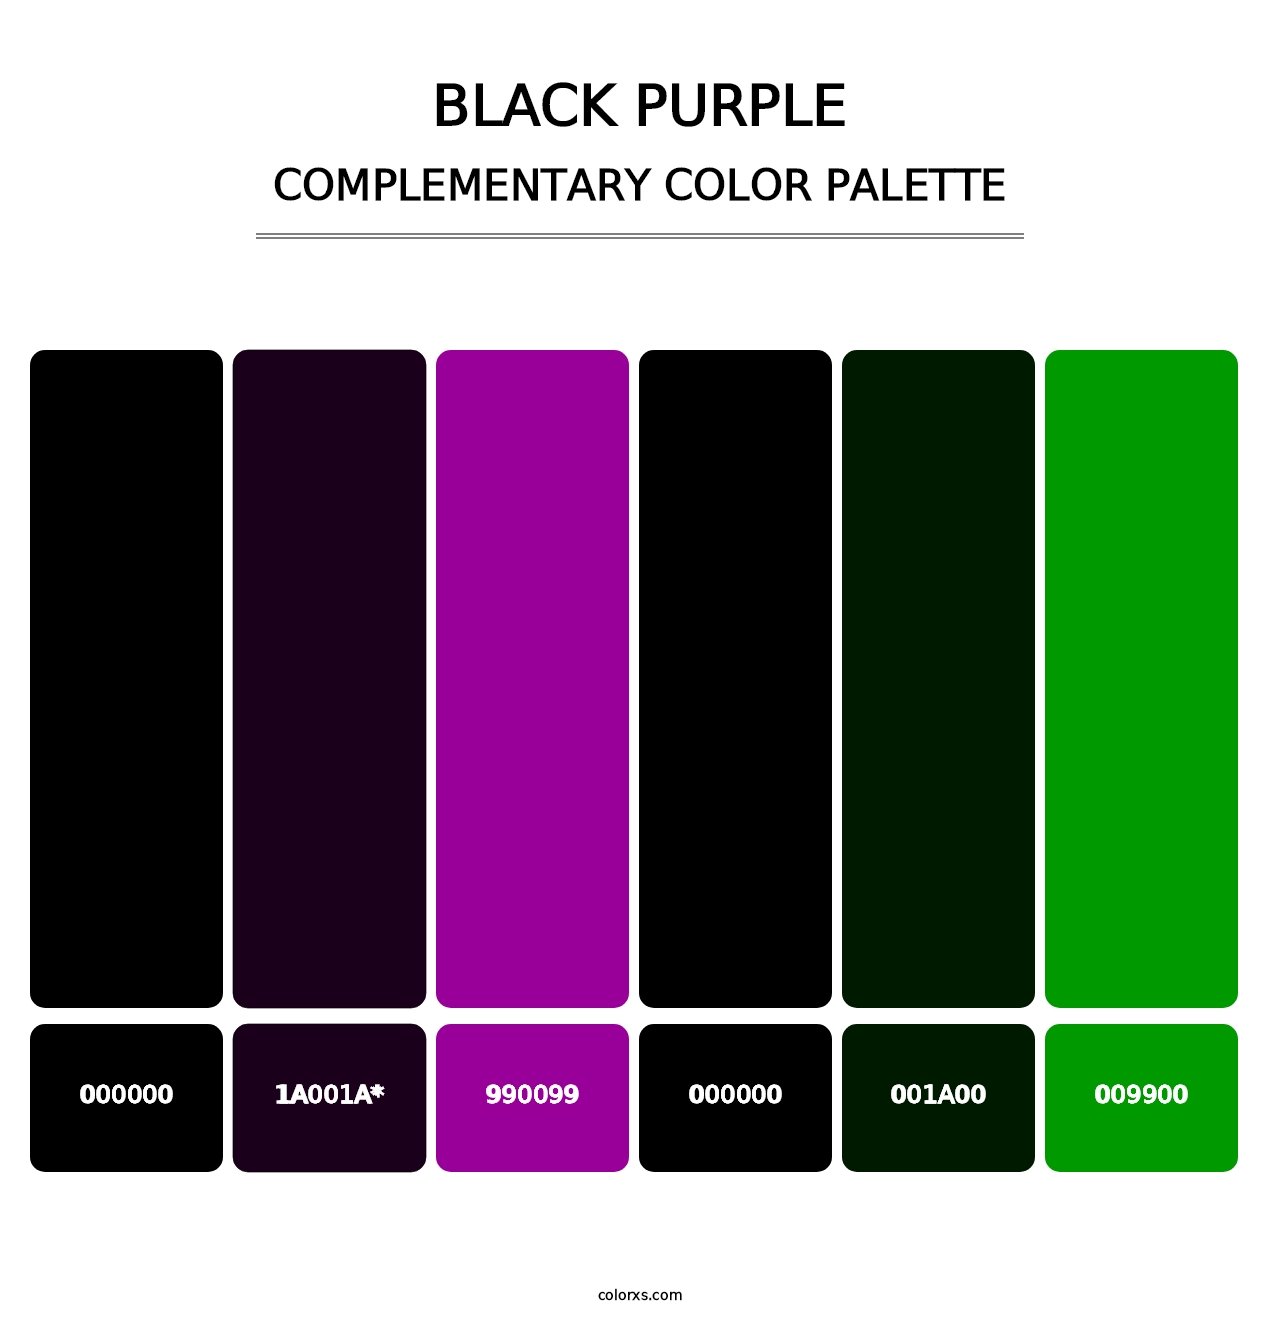 Black Purple - Complementary Color Palette